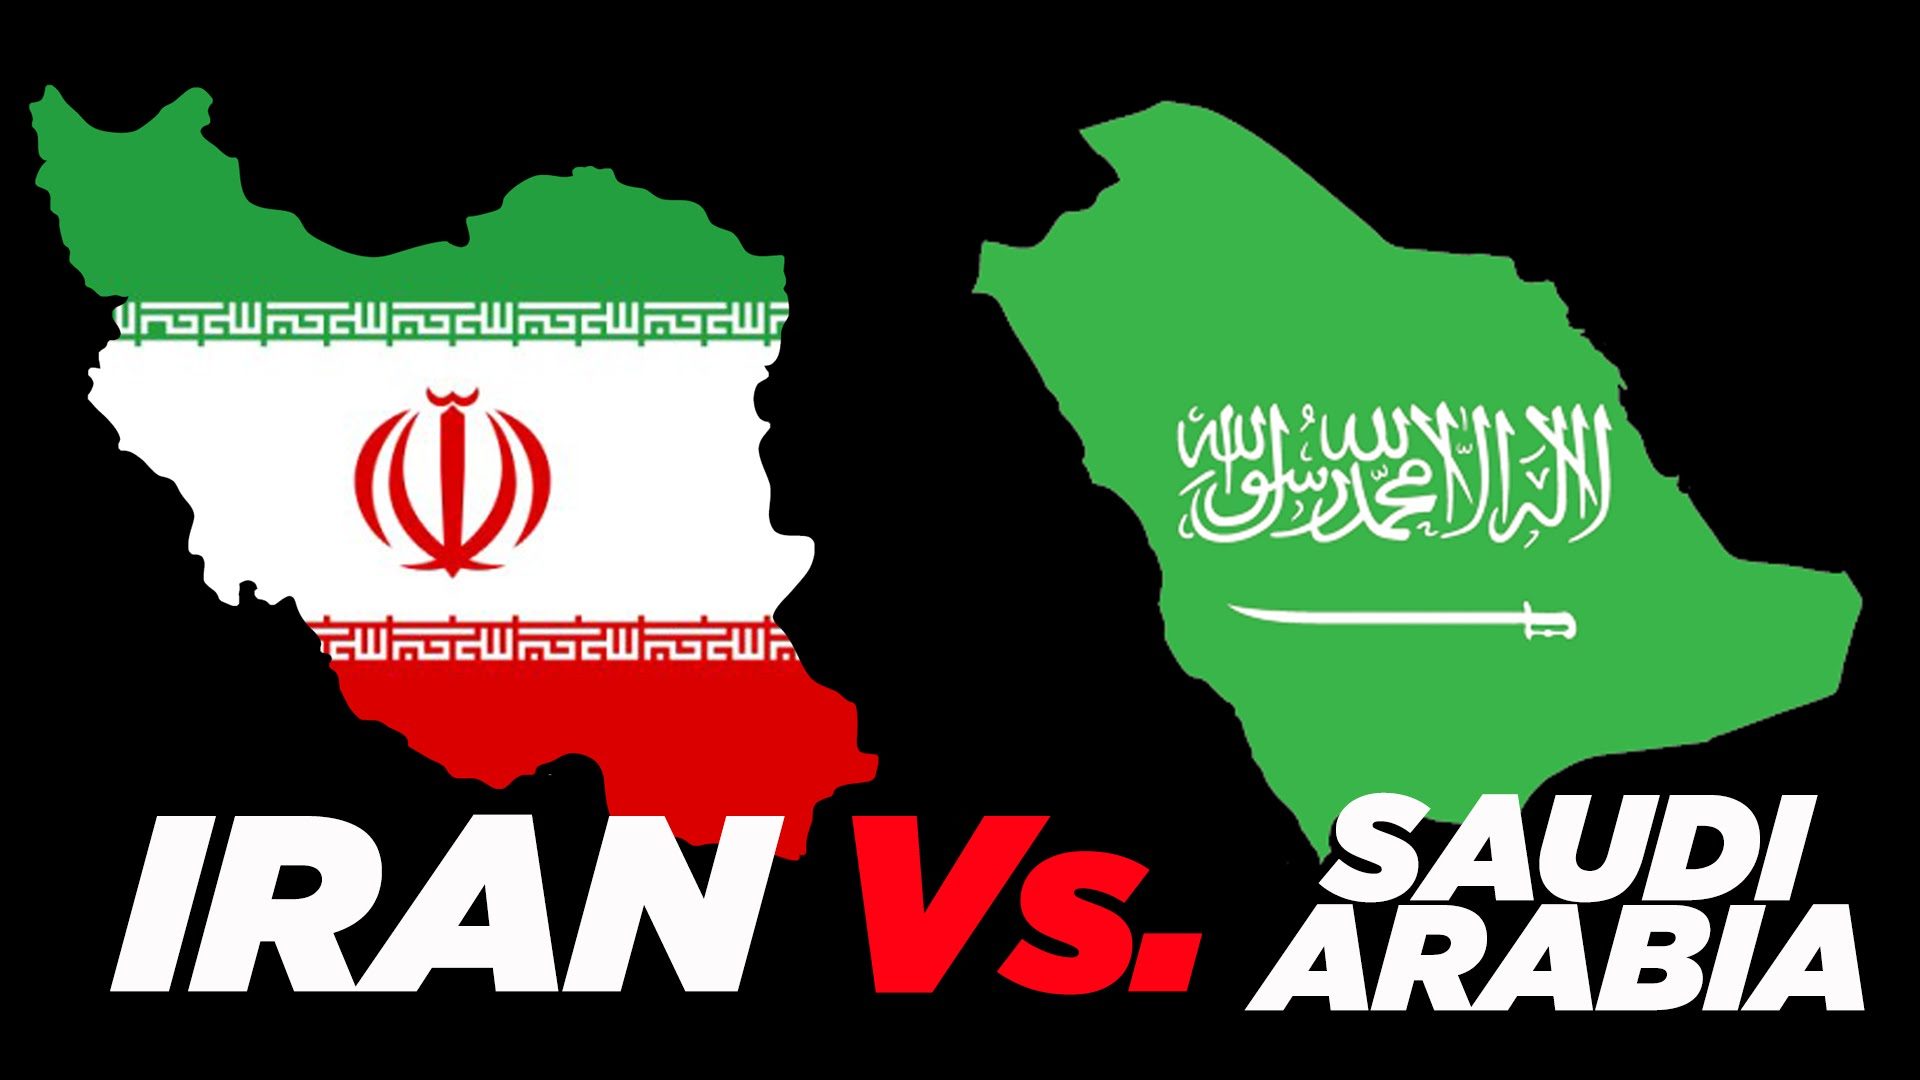 arabia saudita vs iran